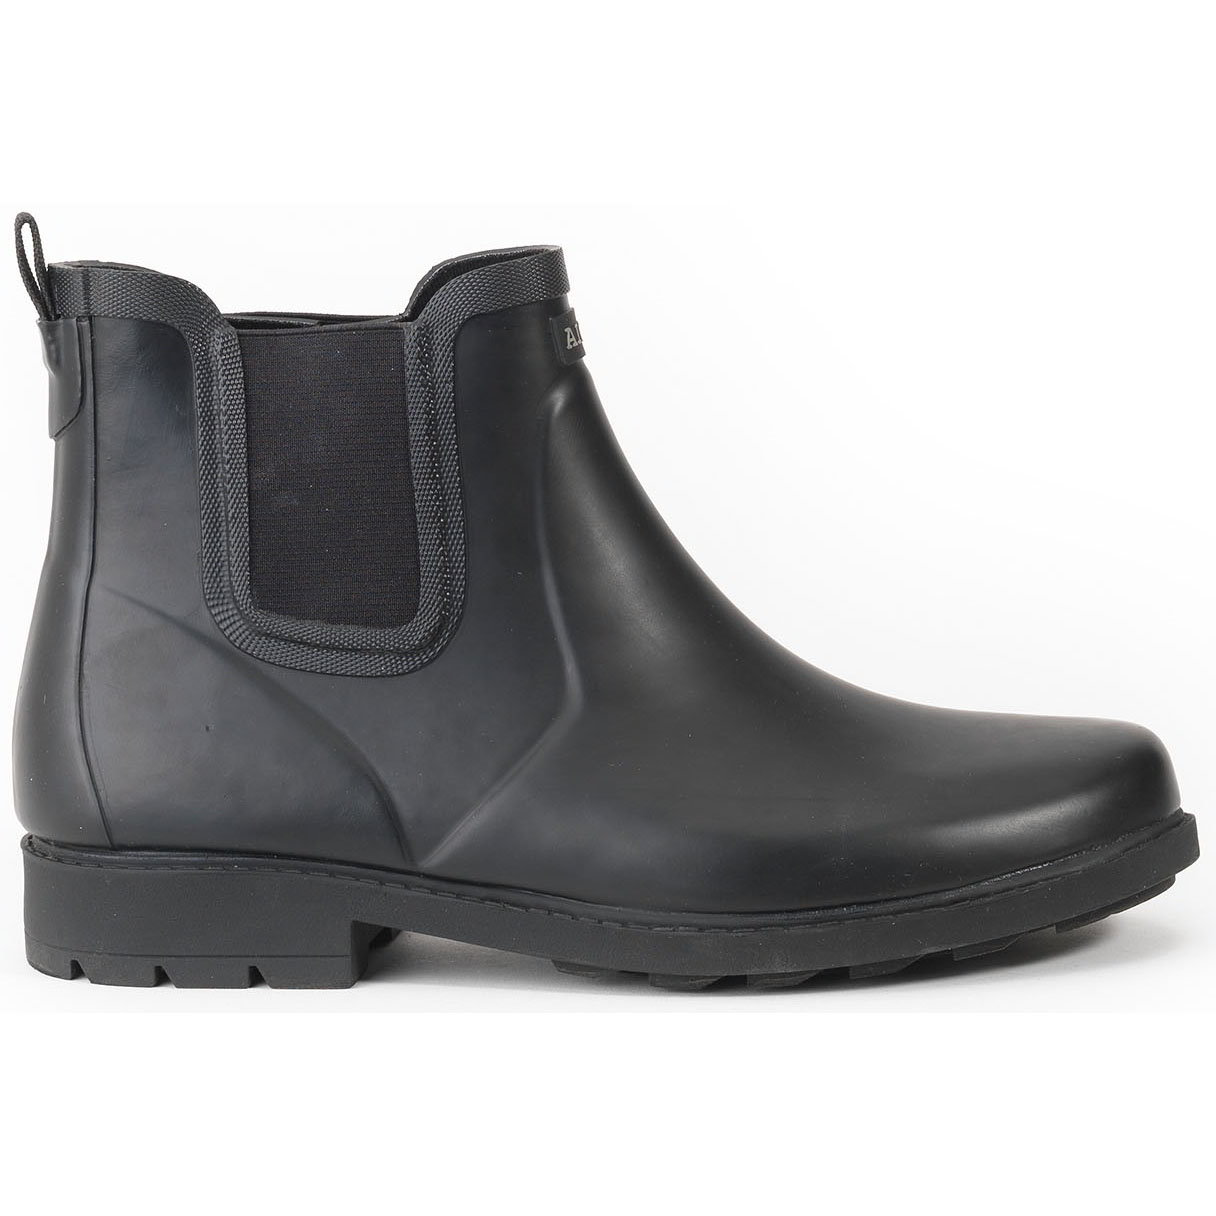 Aigle Mens Carville Wellies Ankle Rain Boots - UK 9.5 Black 2951